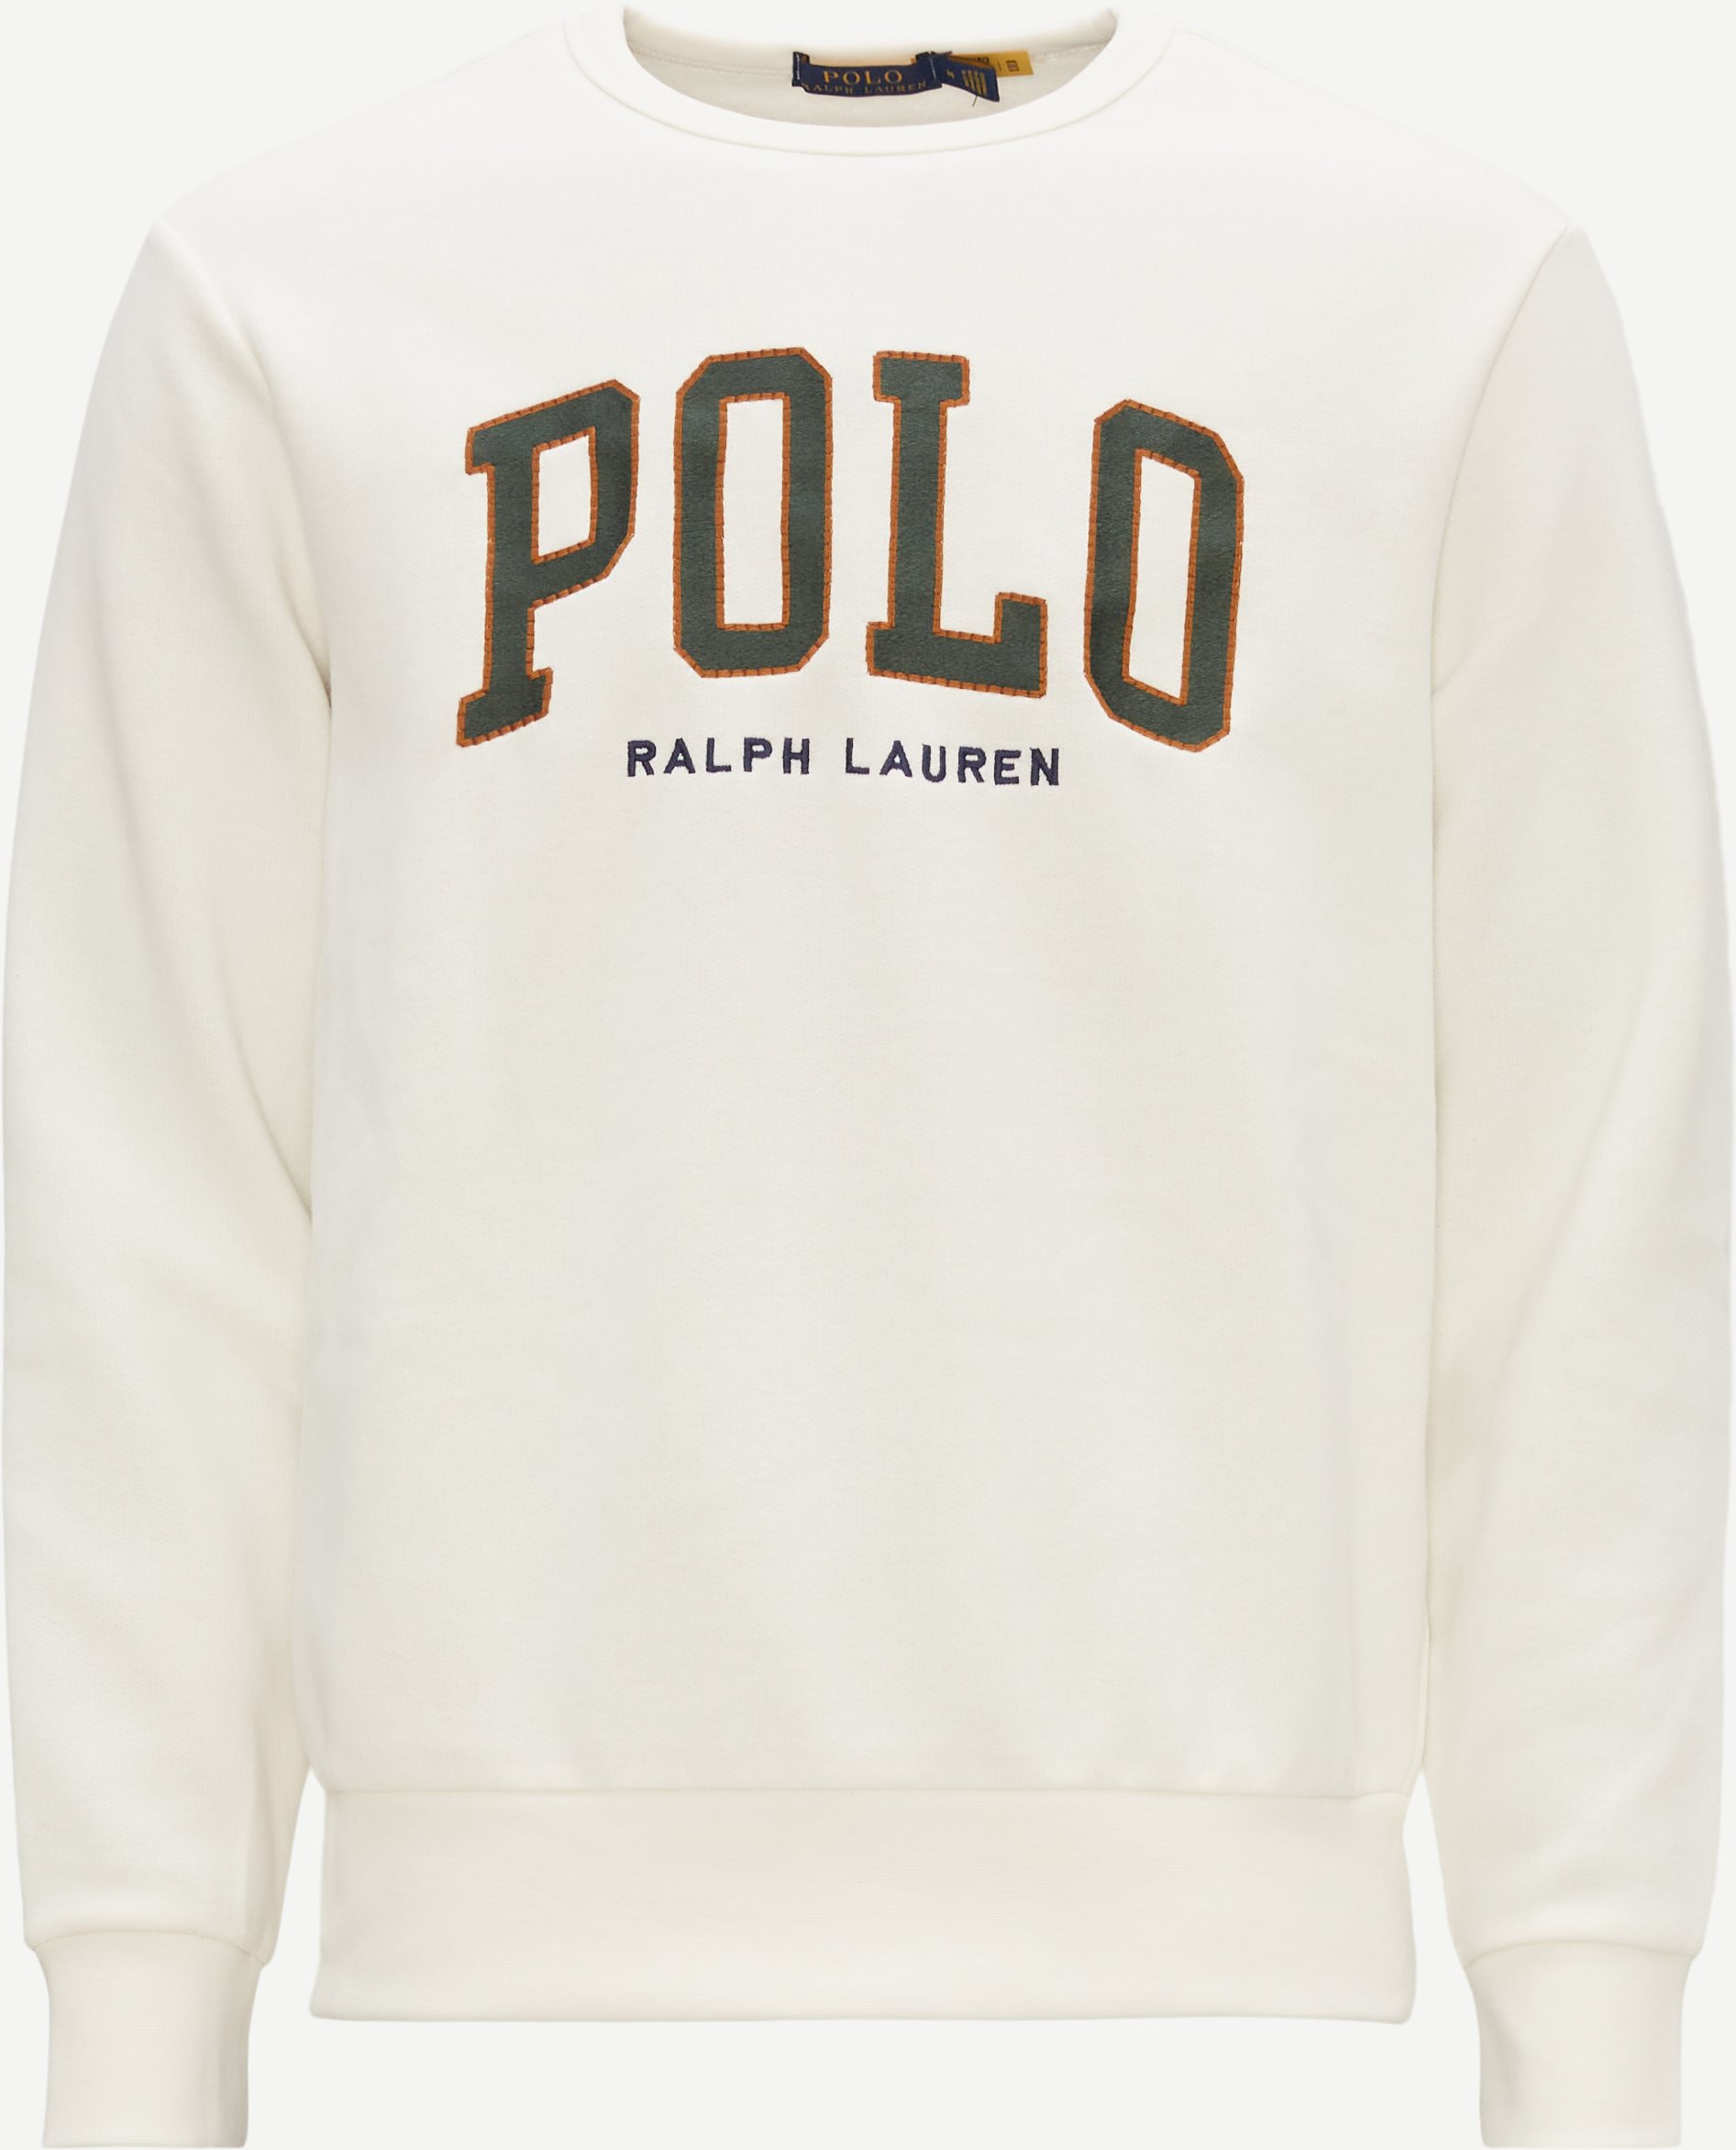 Polo Ralph Lauren Sweatshirts 710917887 Vit